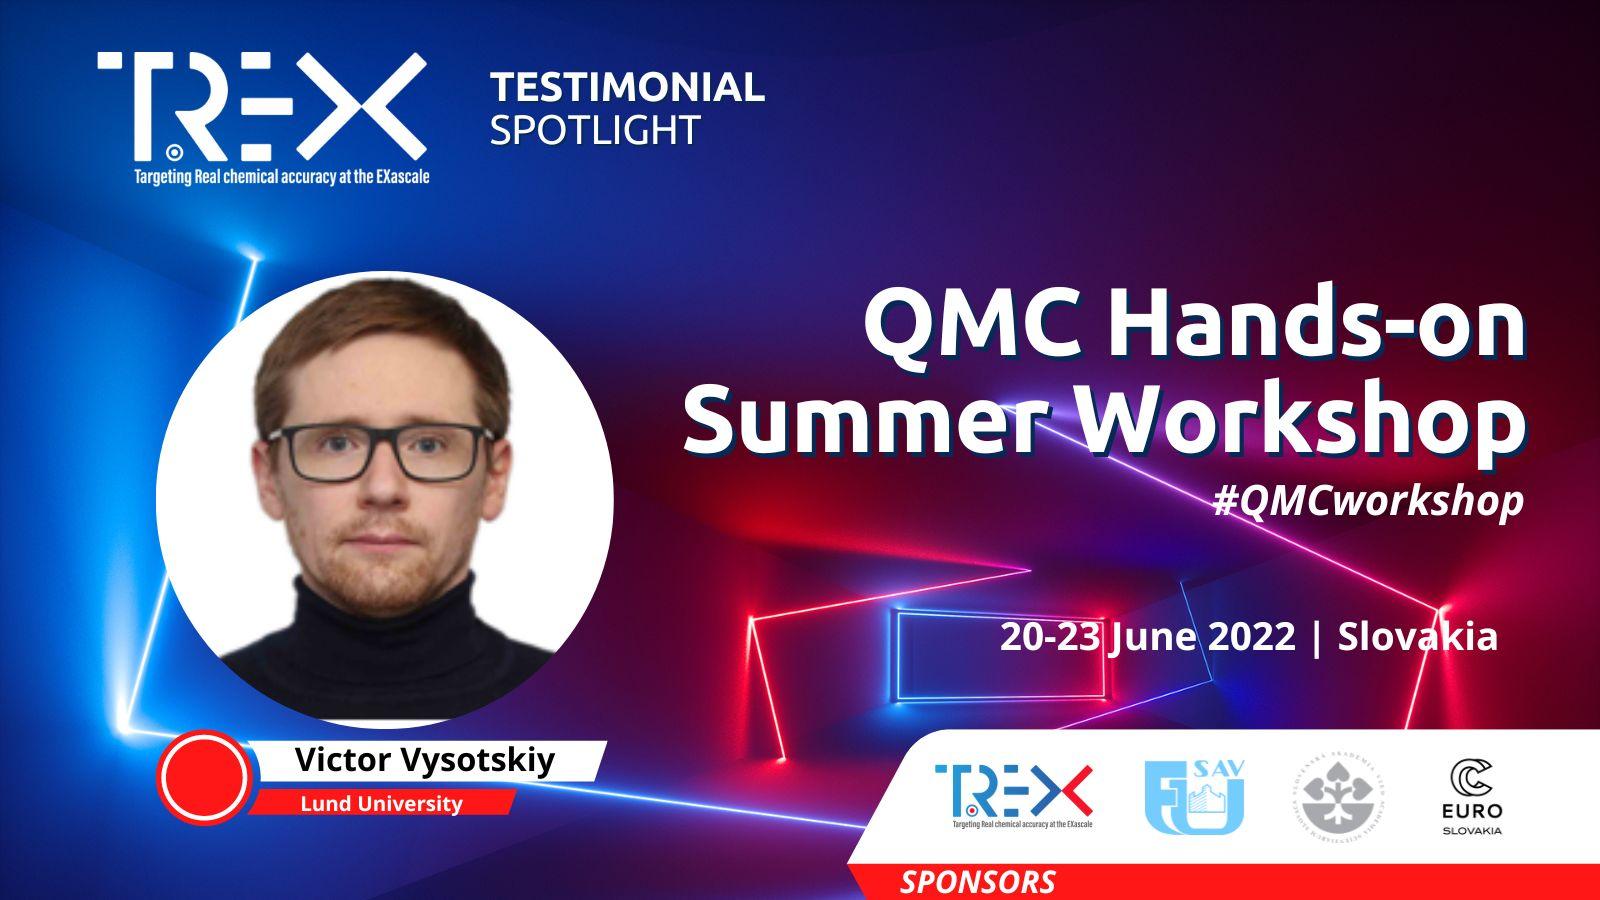 Testimonial: TREX QMC Workshop